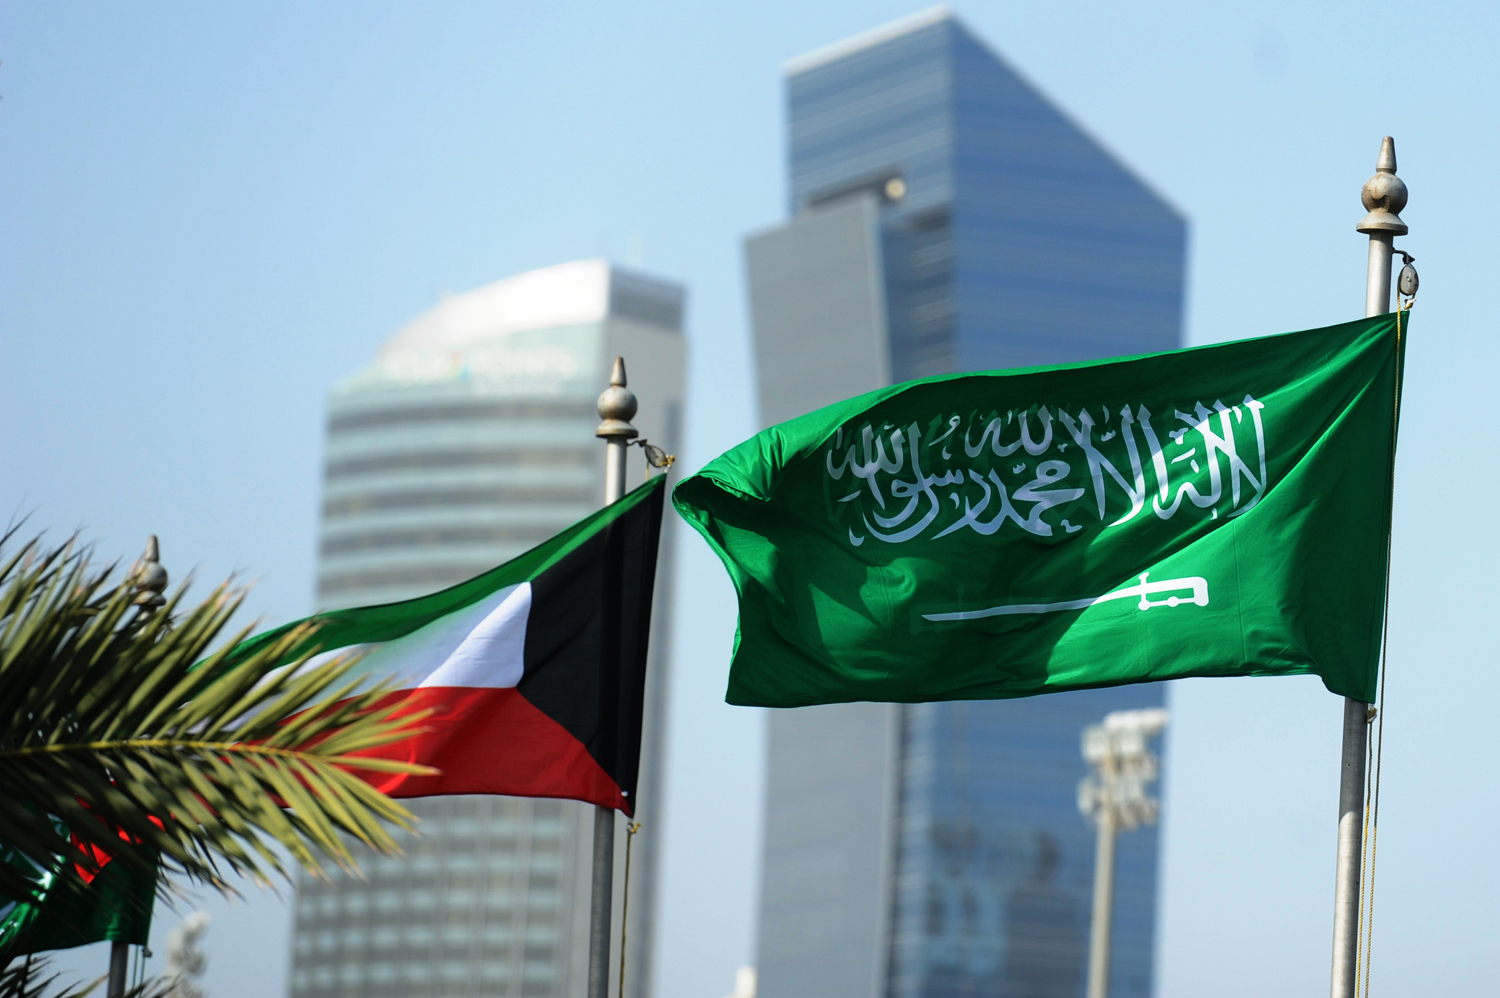 Kuwait-Saudi flags welcome upcoming visit by King Salman